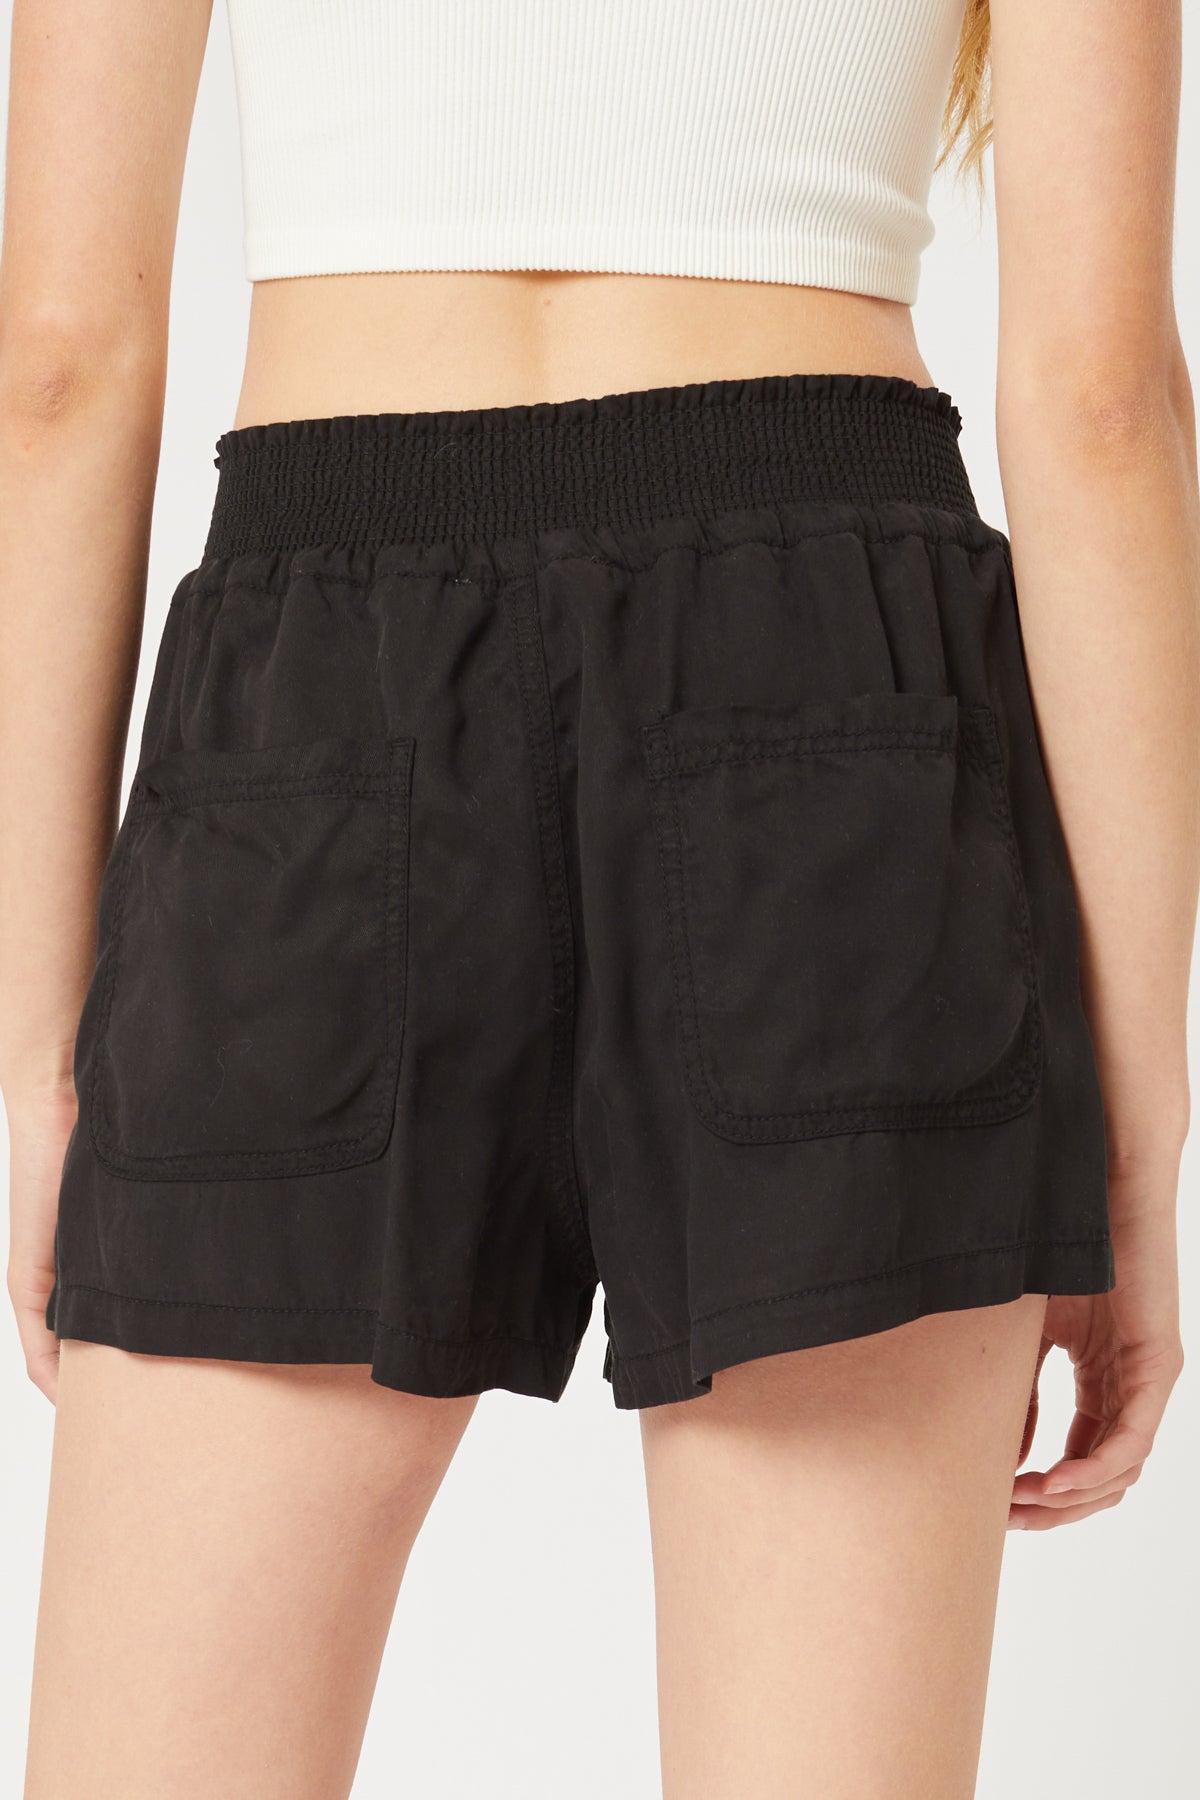 Anini Beach Shorts